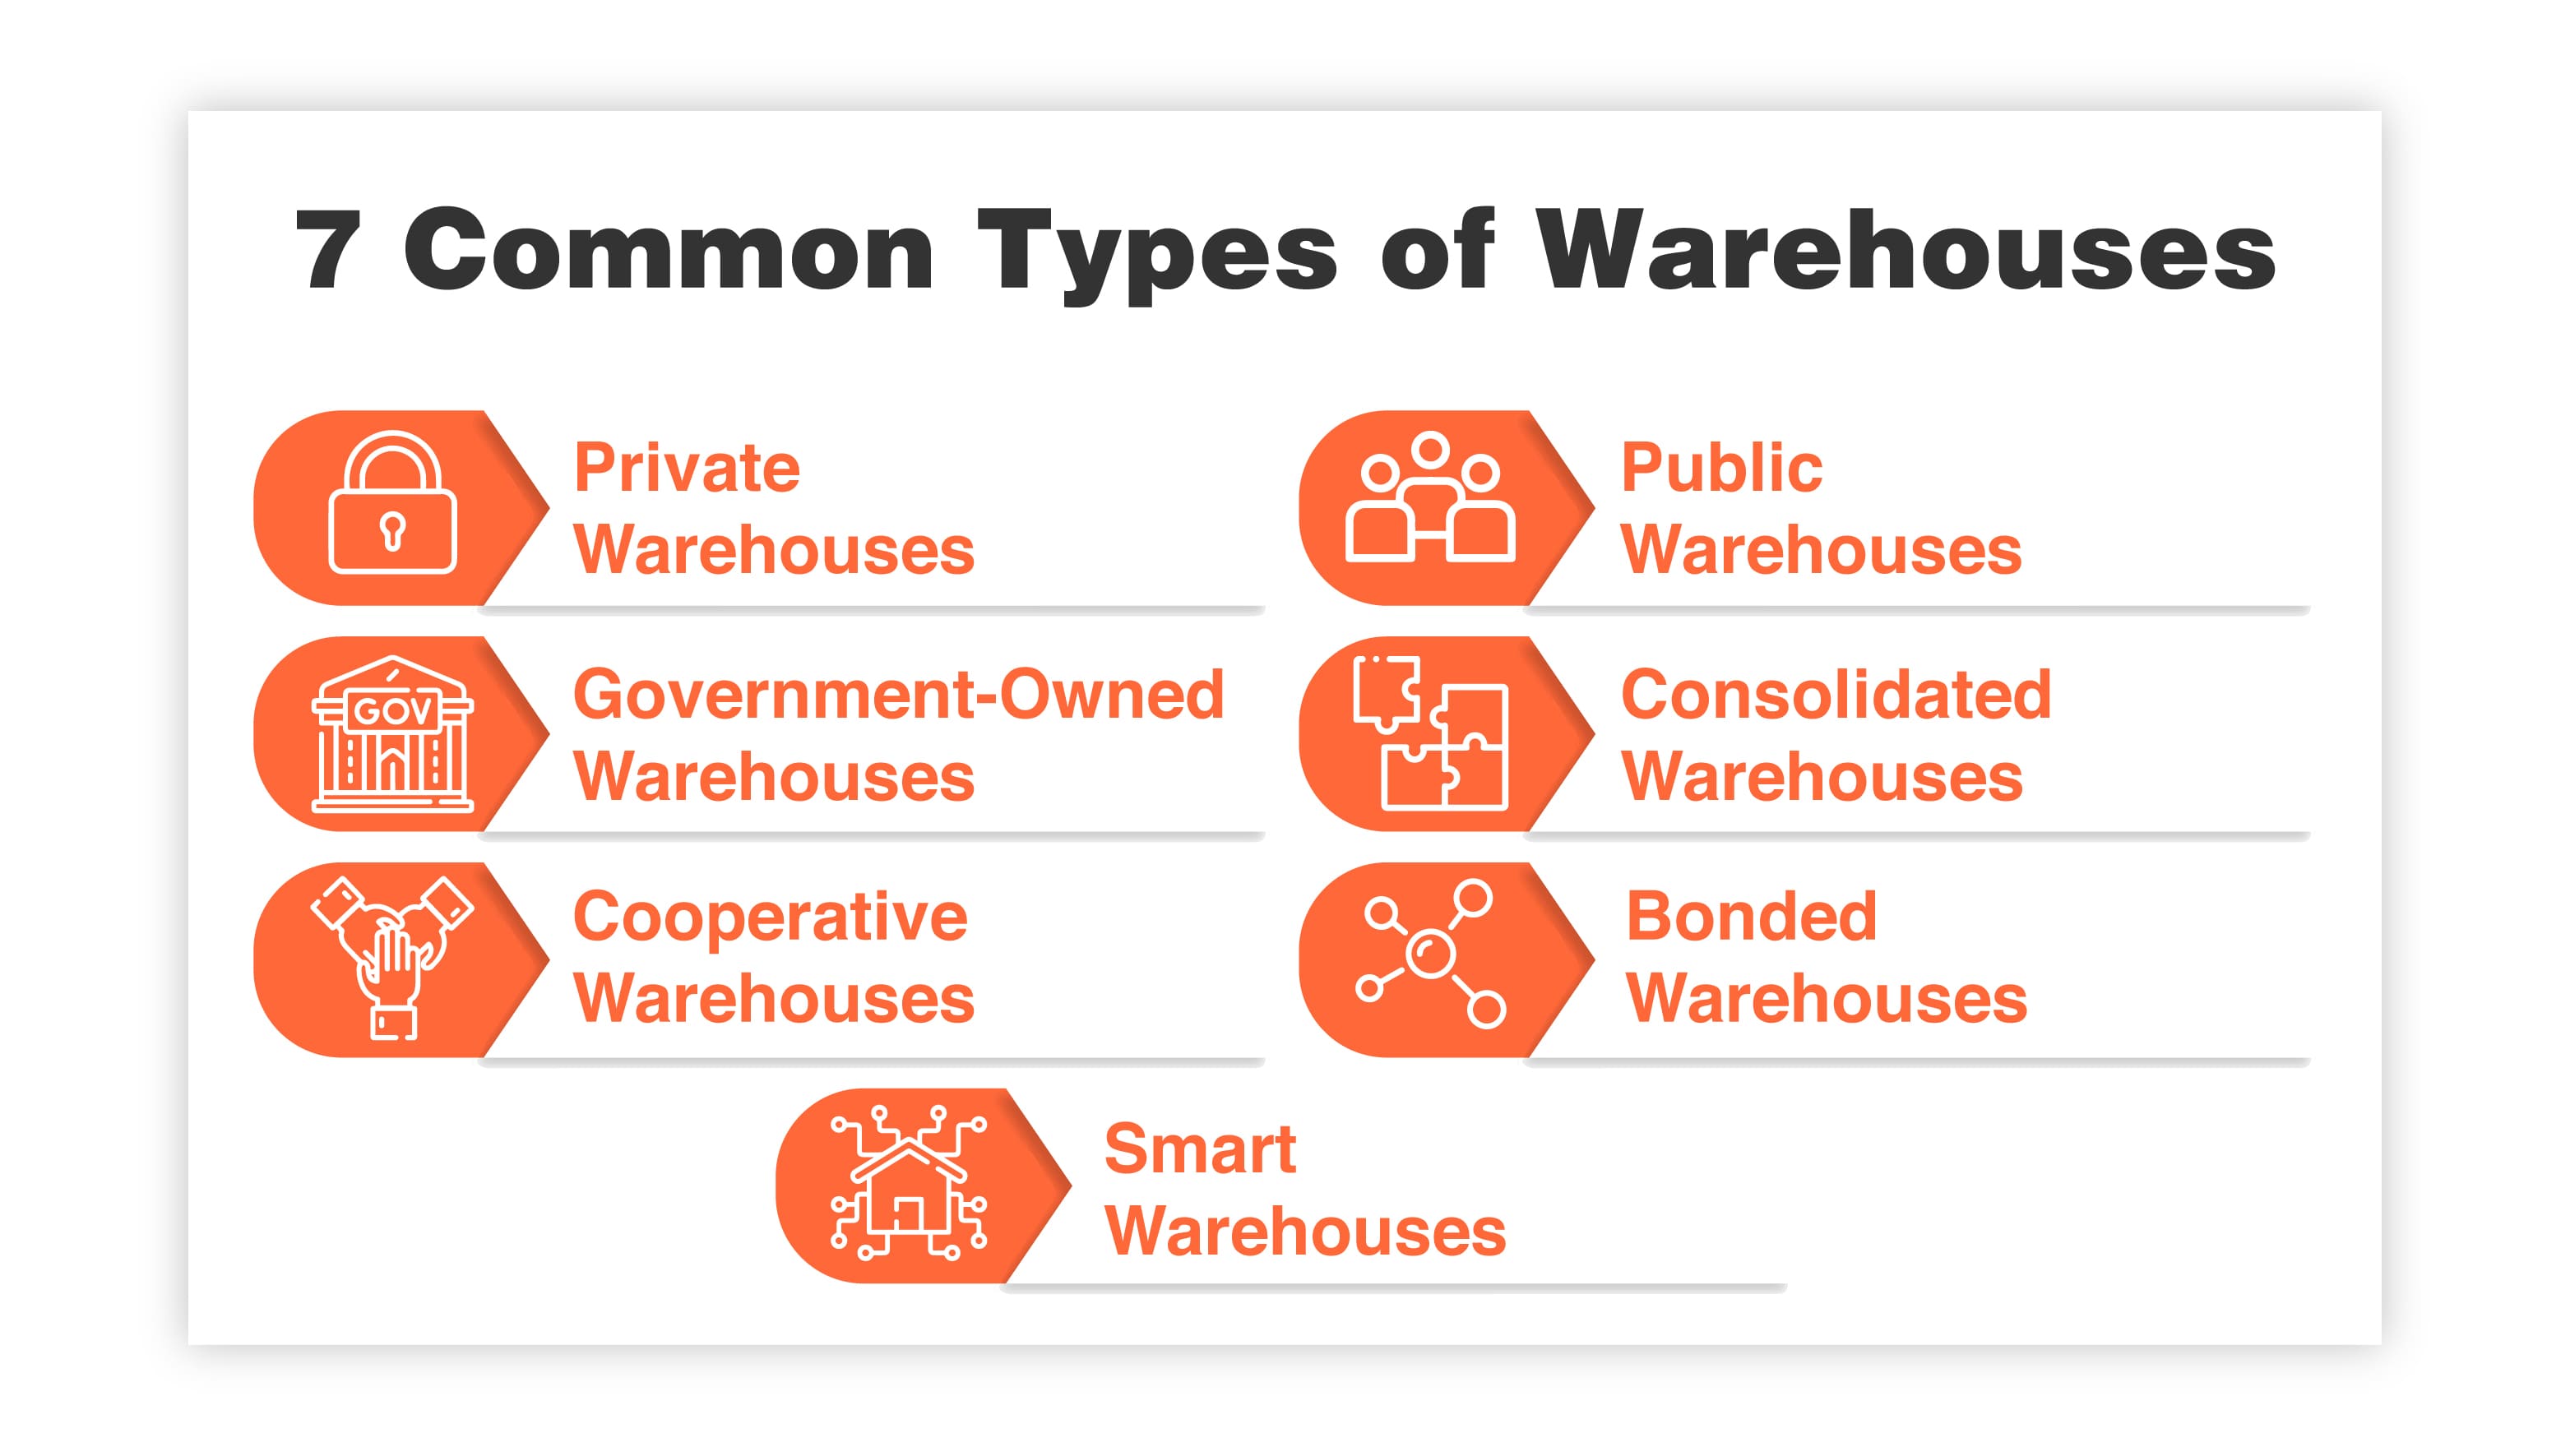 7 Common Types of Warehouses